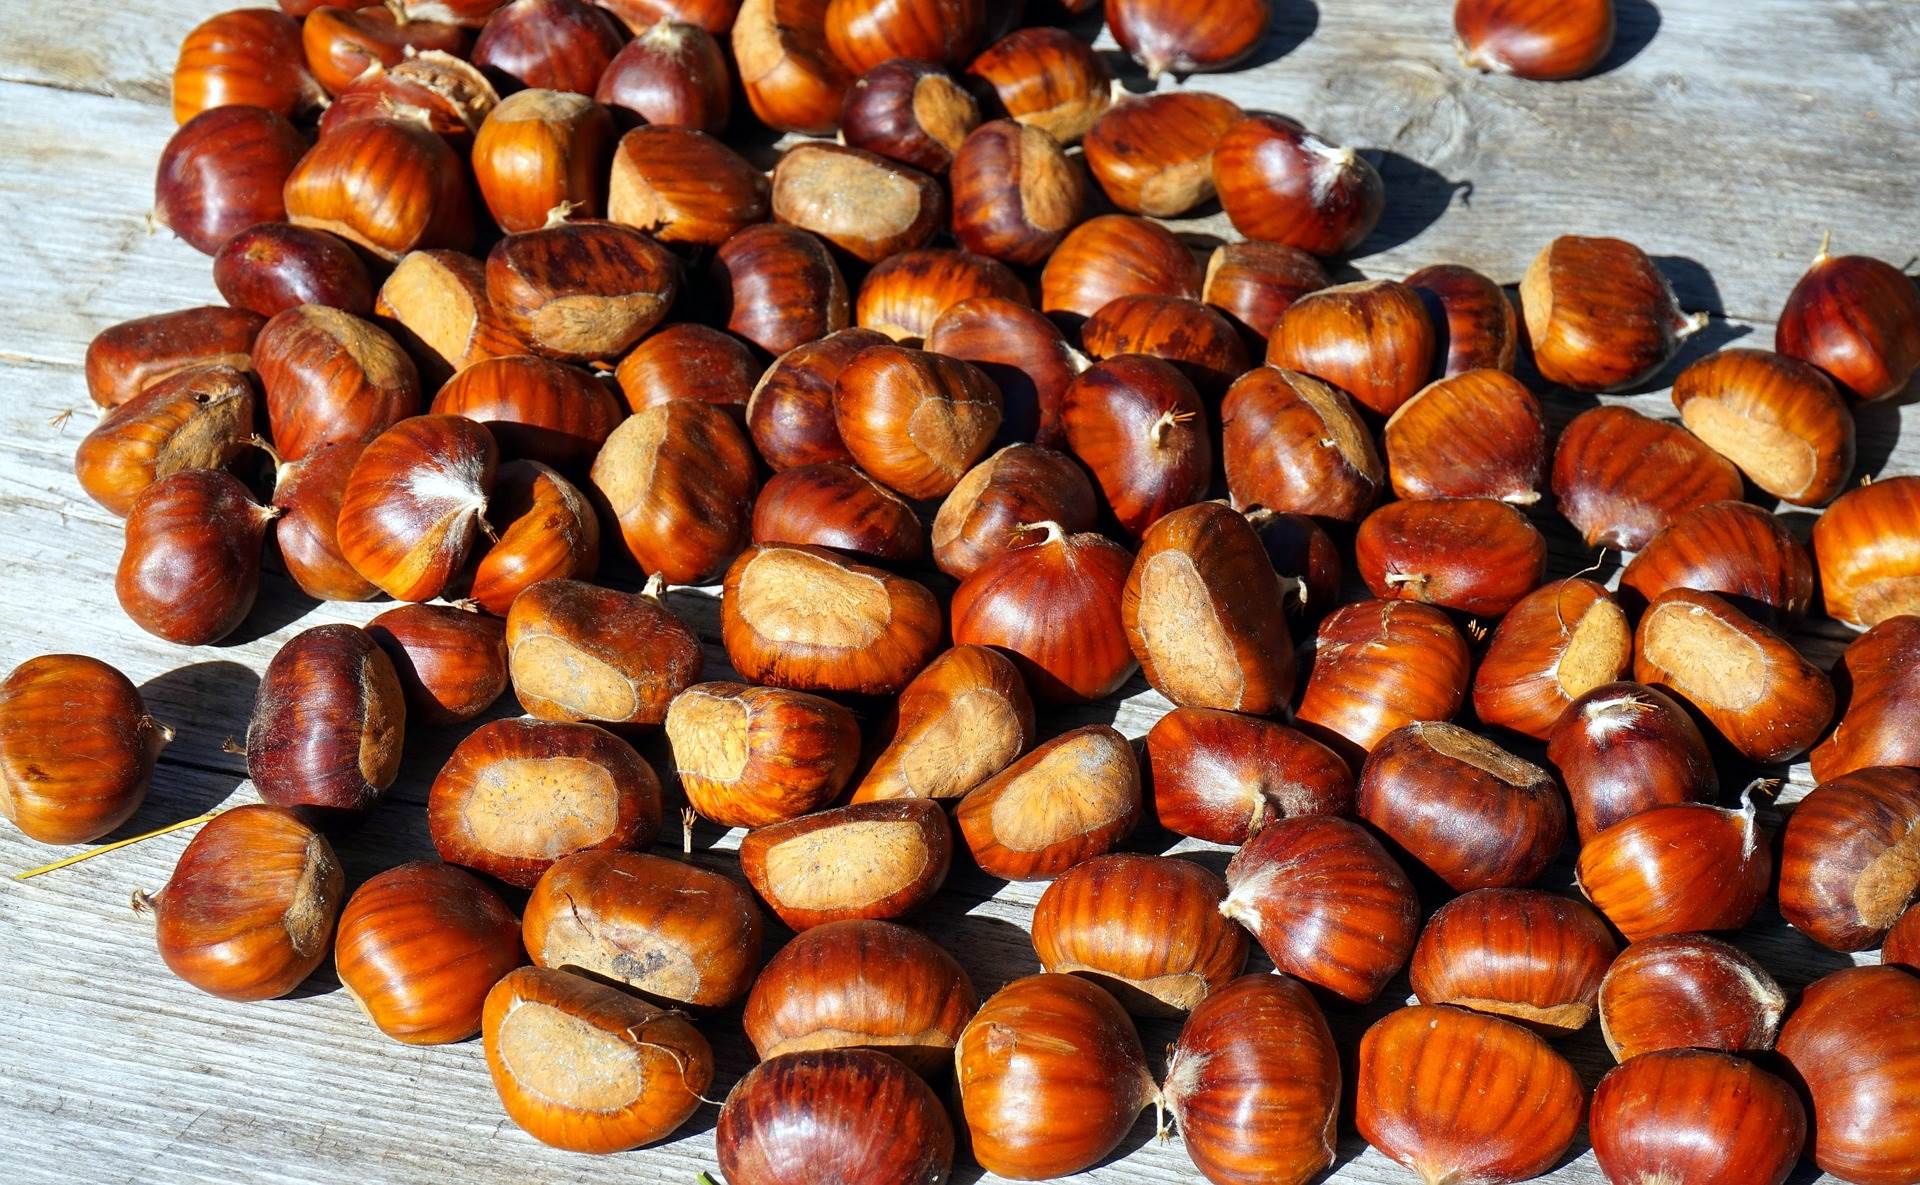 chestnuts-gc0f0d6654_1920.jpg